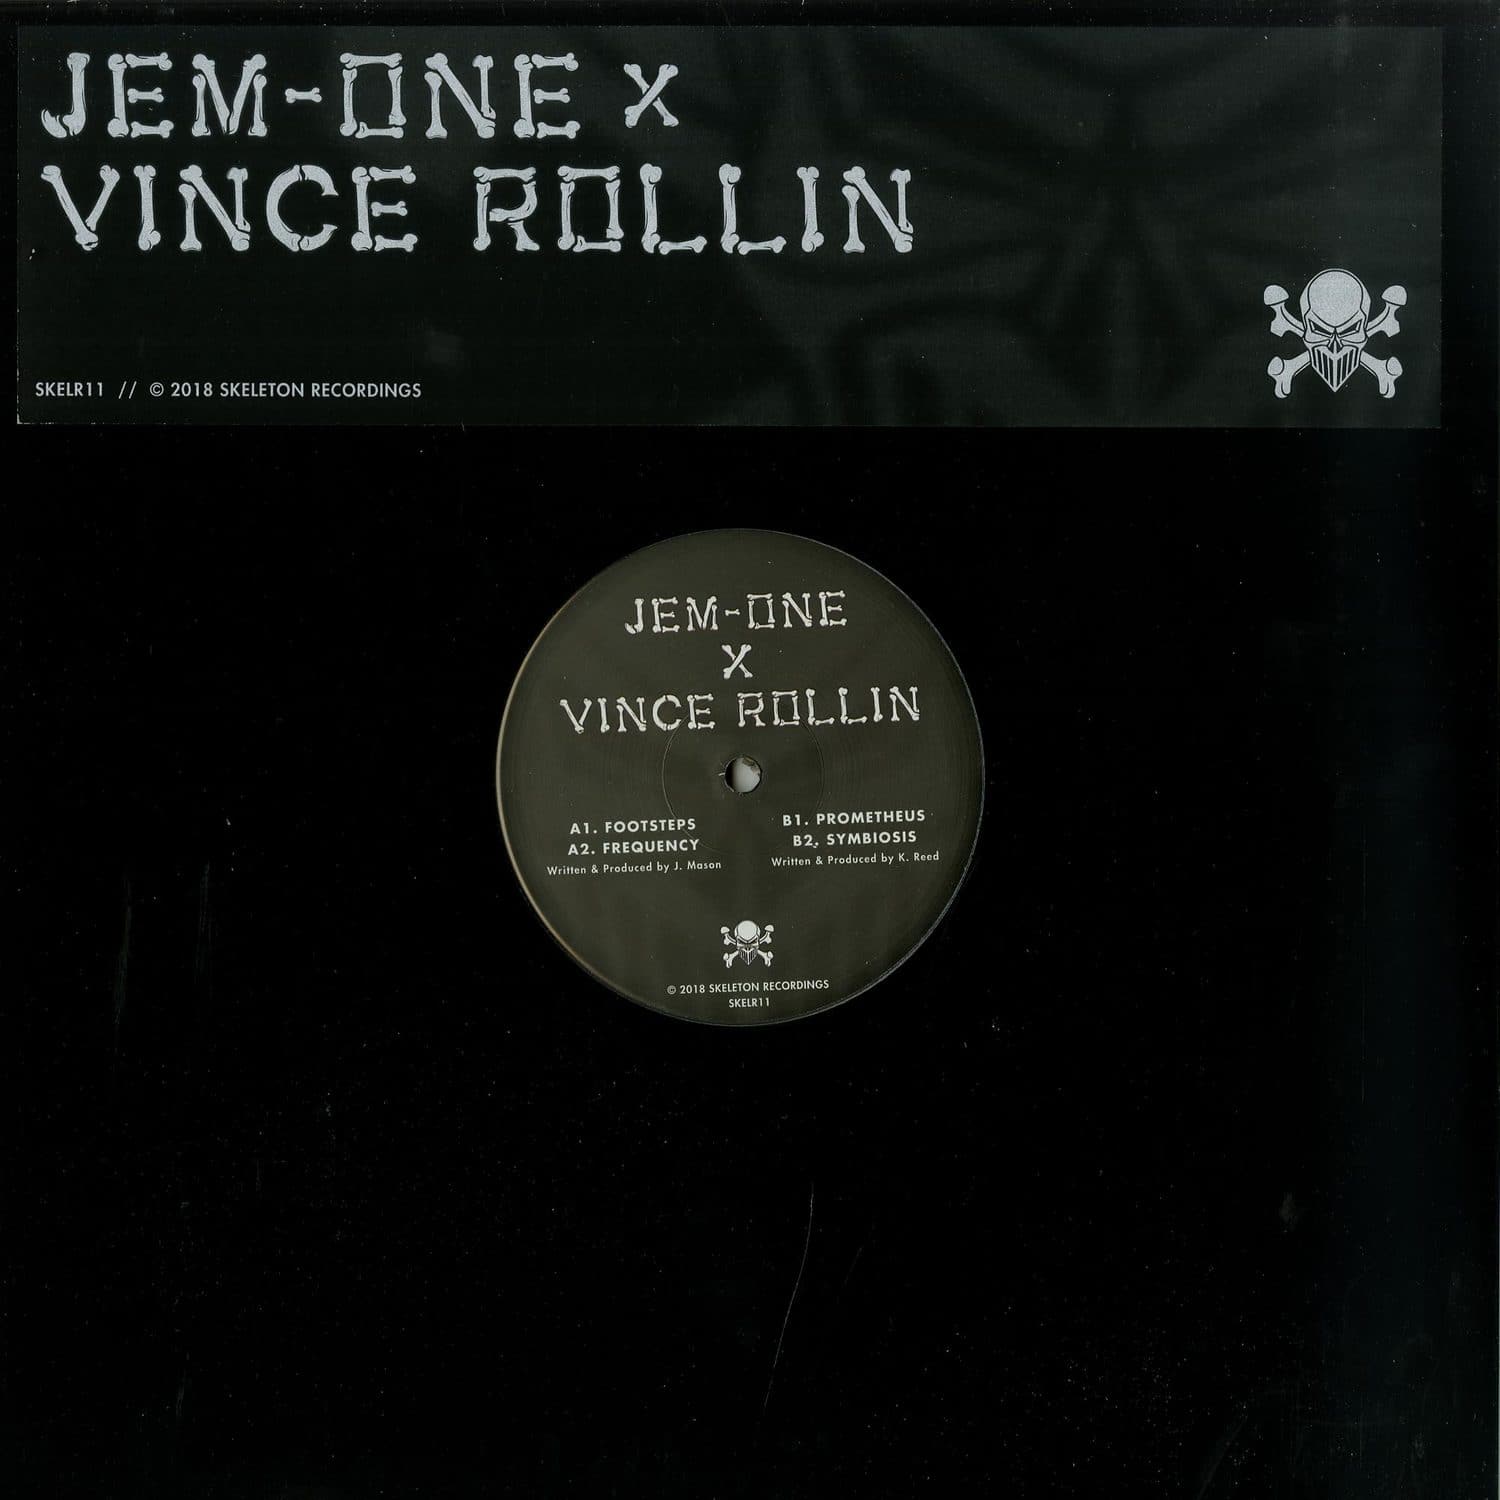 Jem-One x Vince Rollin - EP